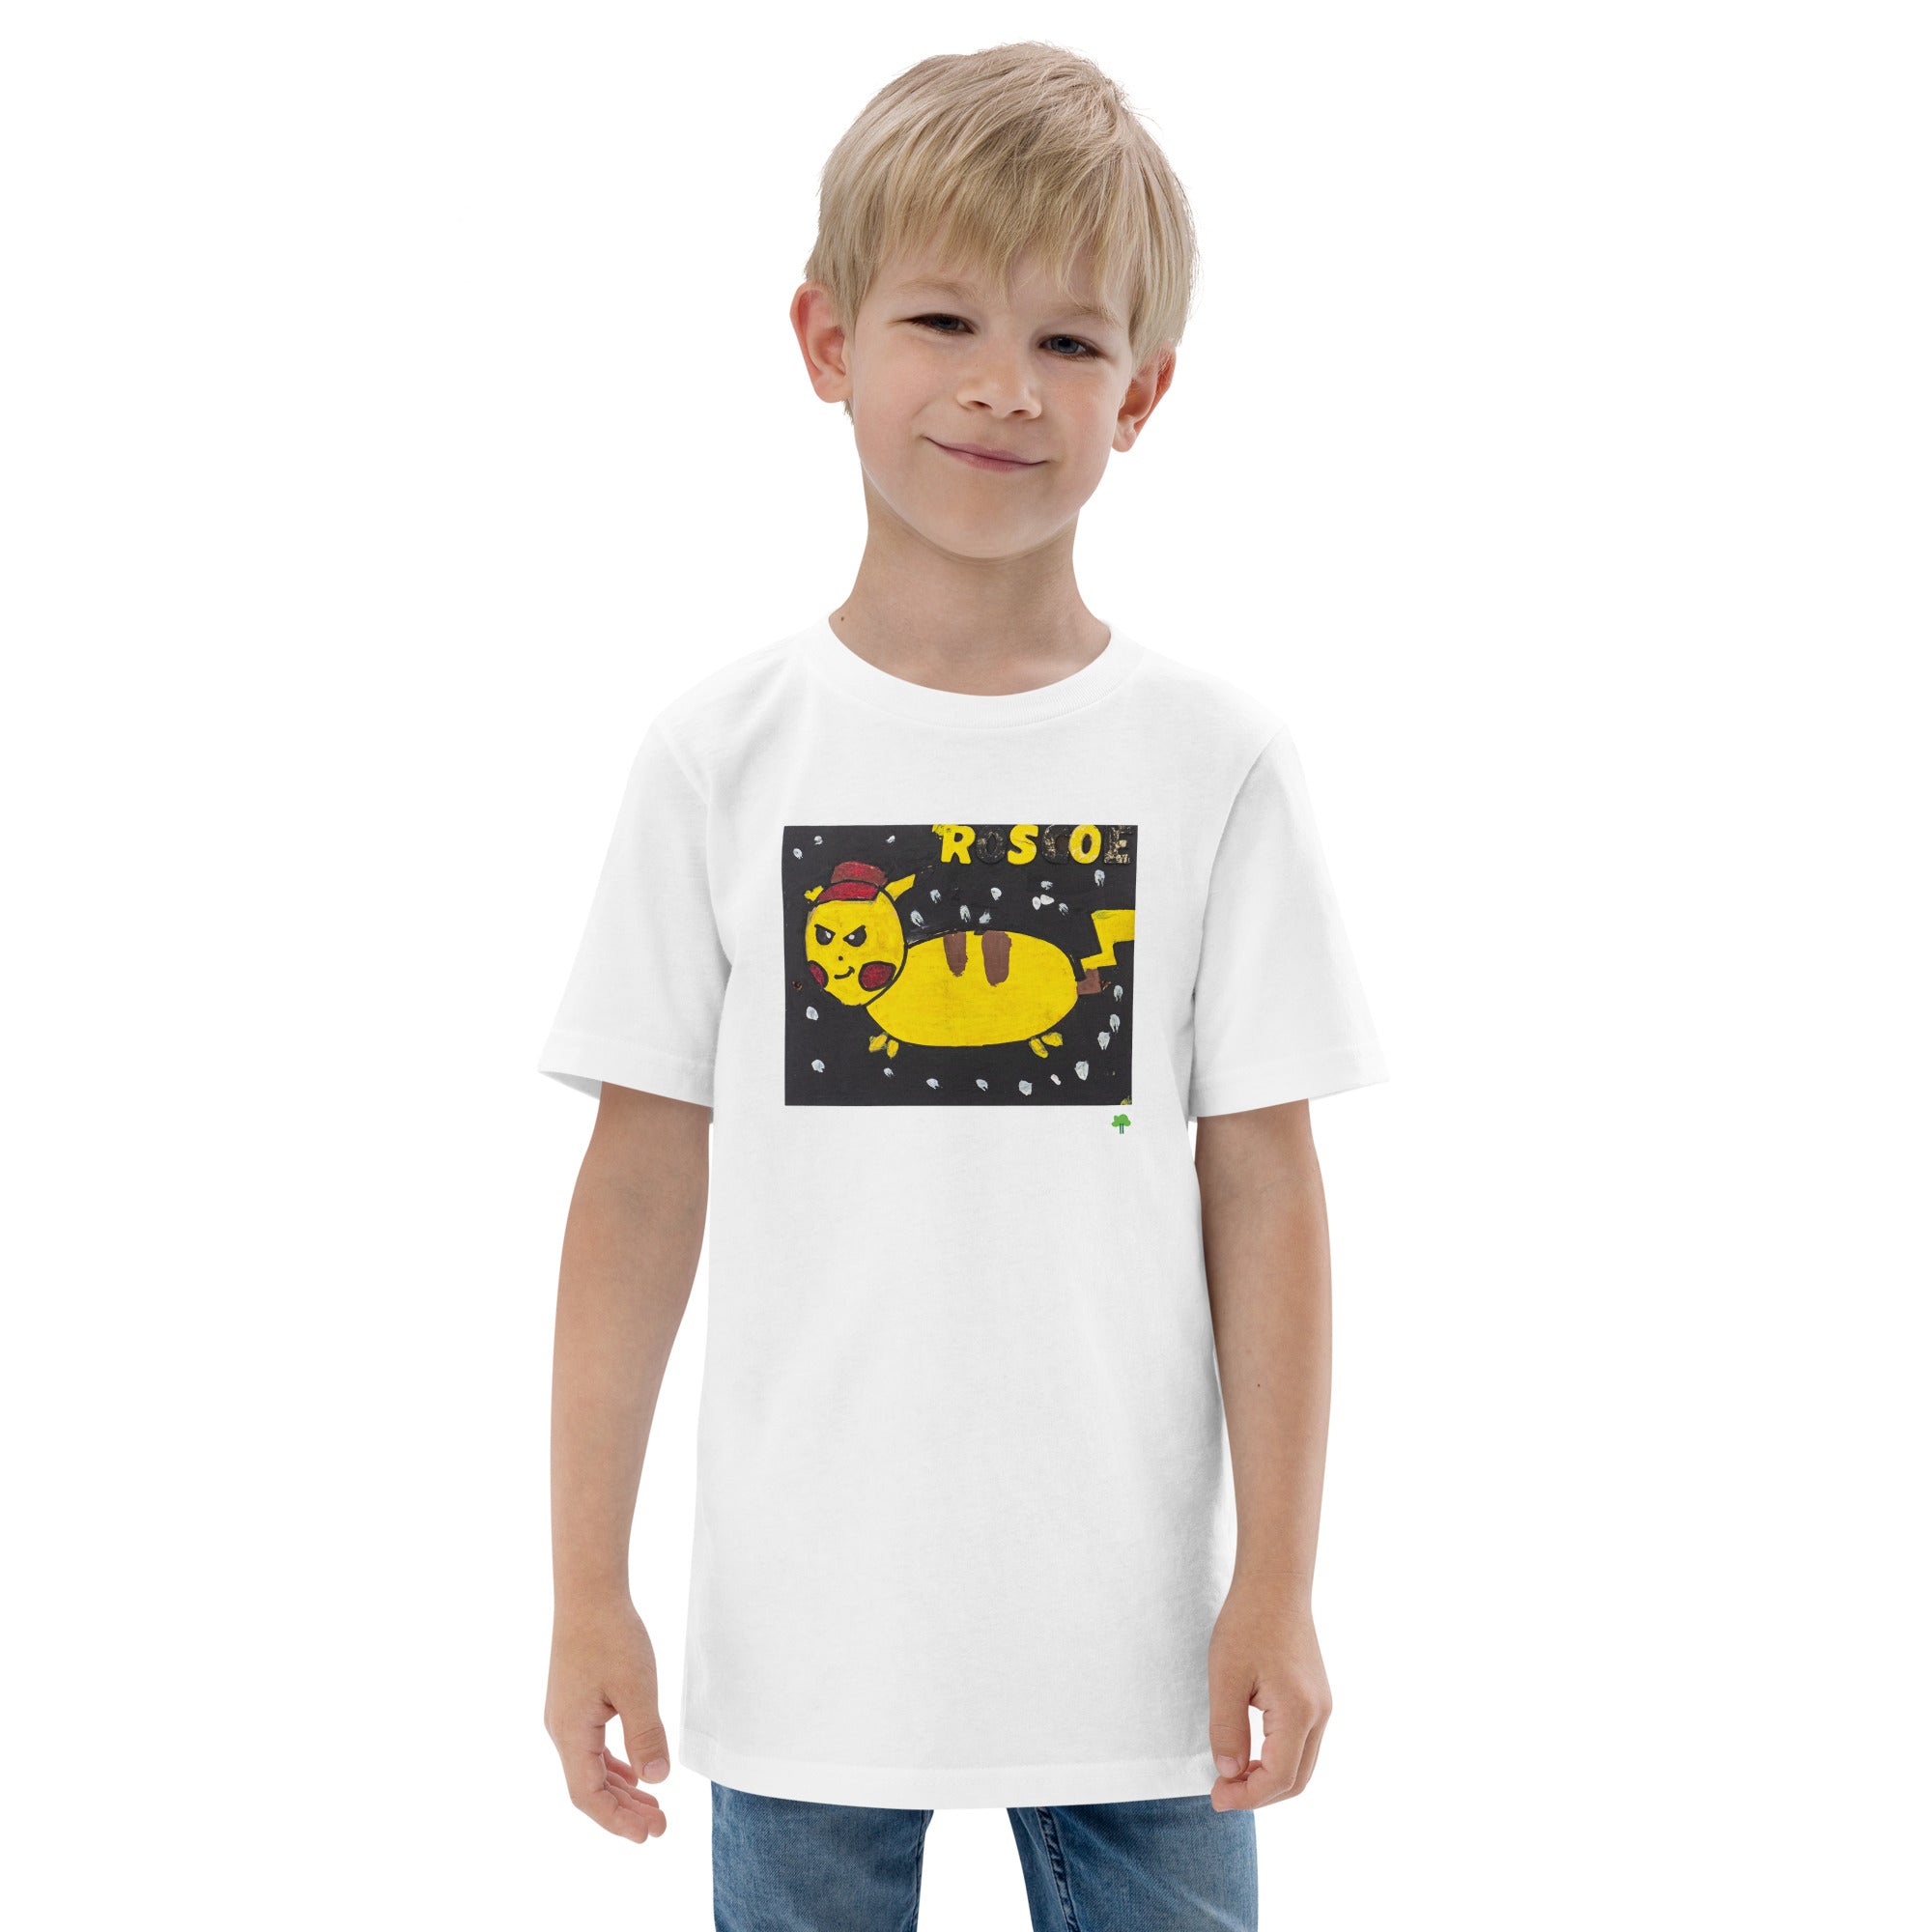 II Temp - Sabana - K9 | Youth jersey t-shirt